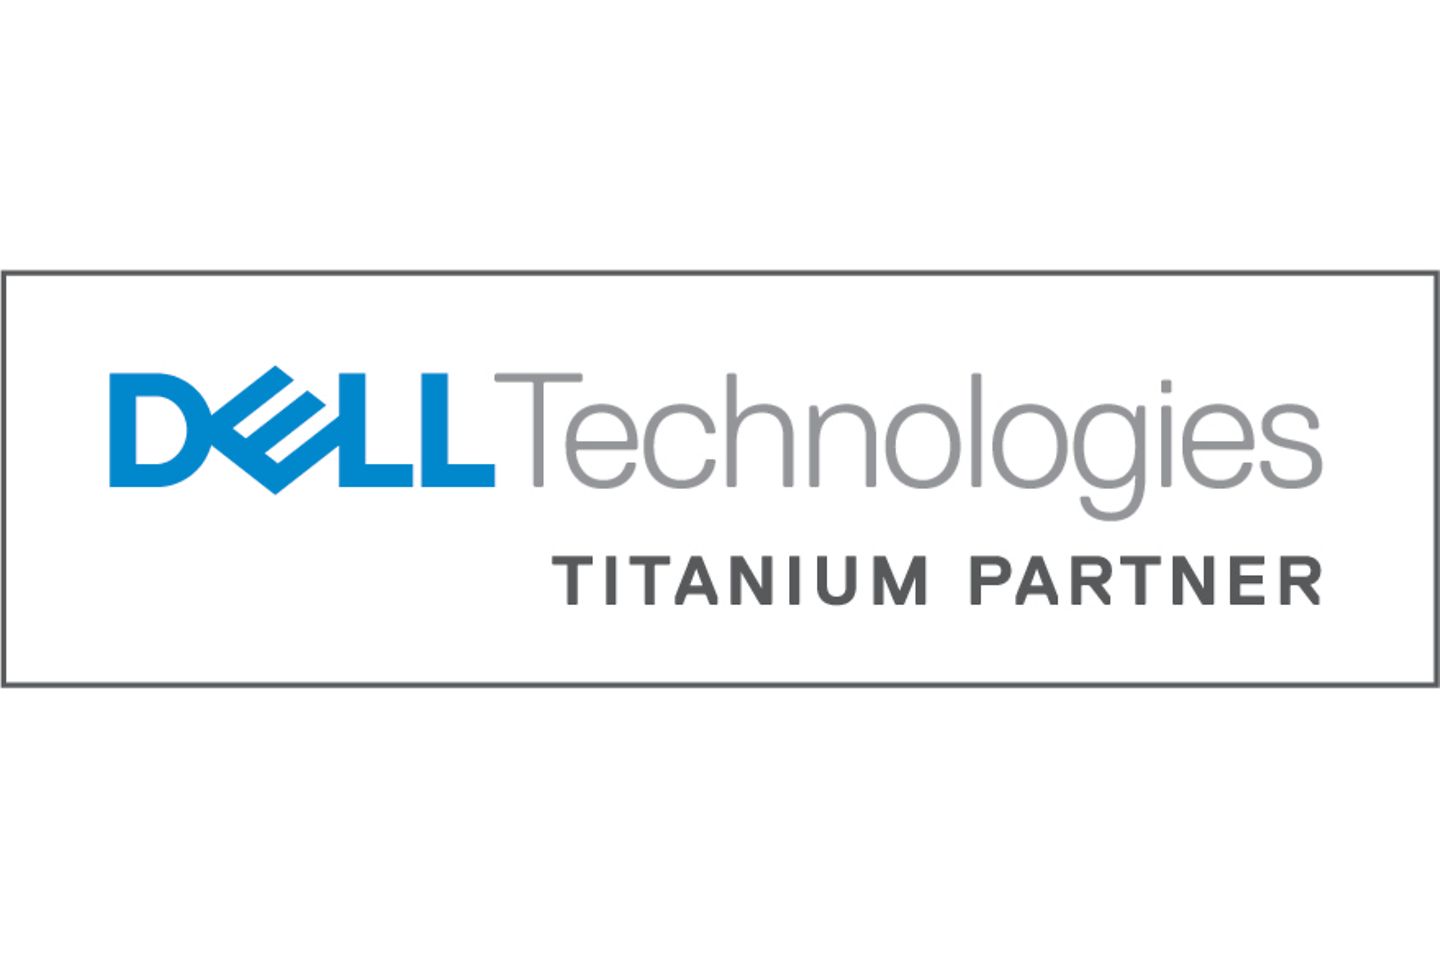 Dell Technologies logo and Platinum Partner beneath it